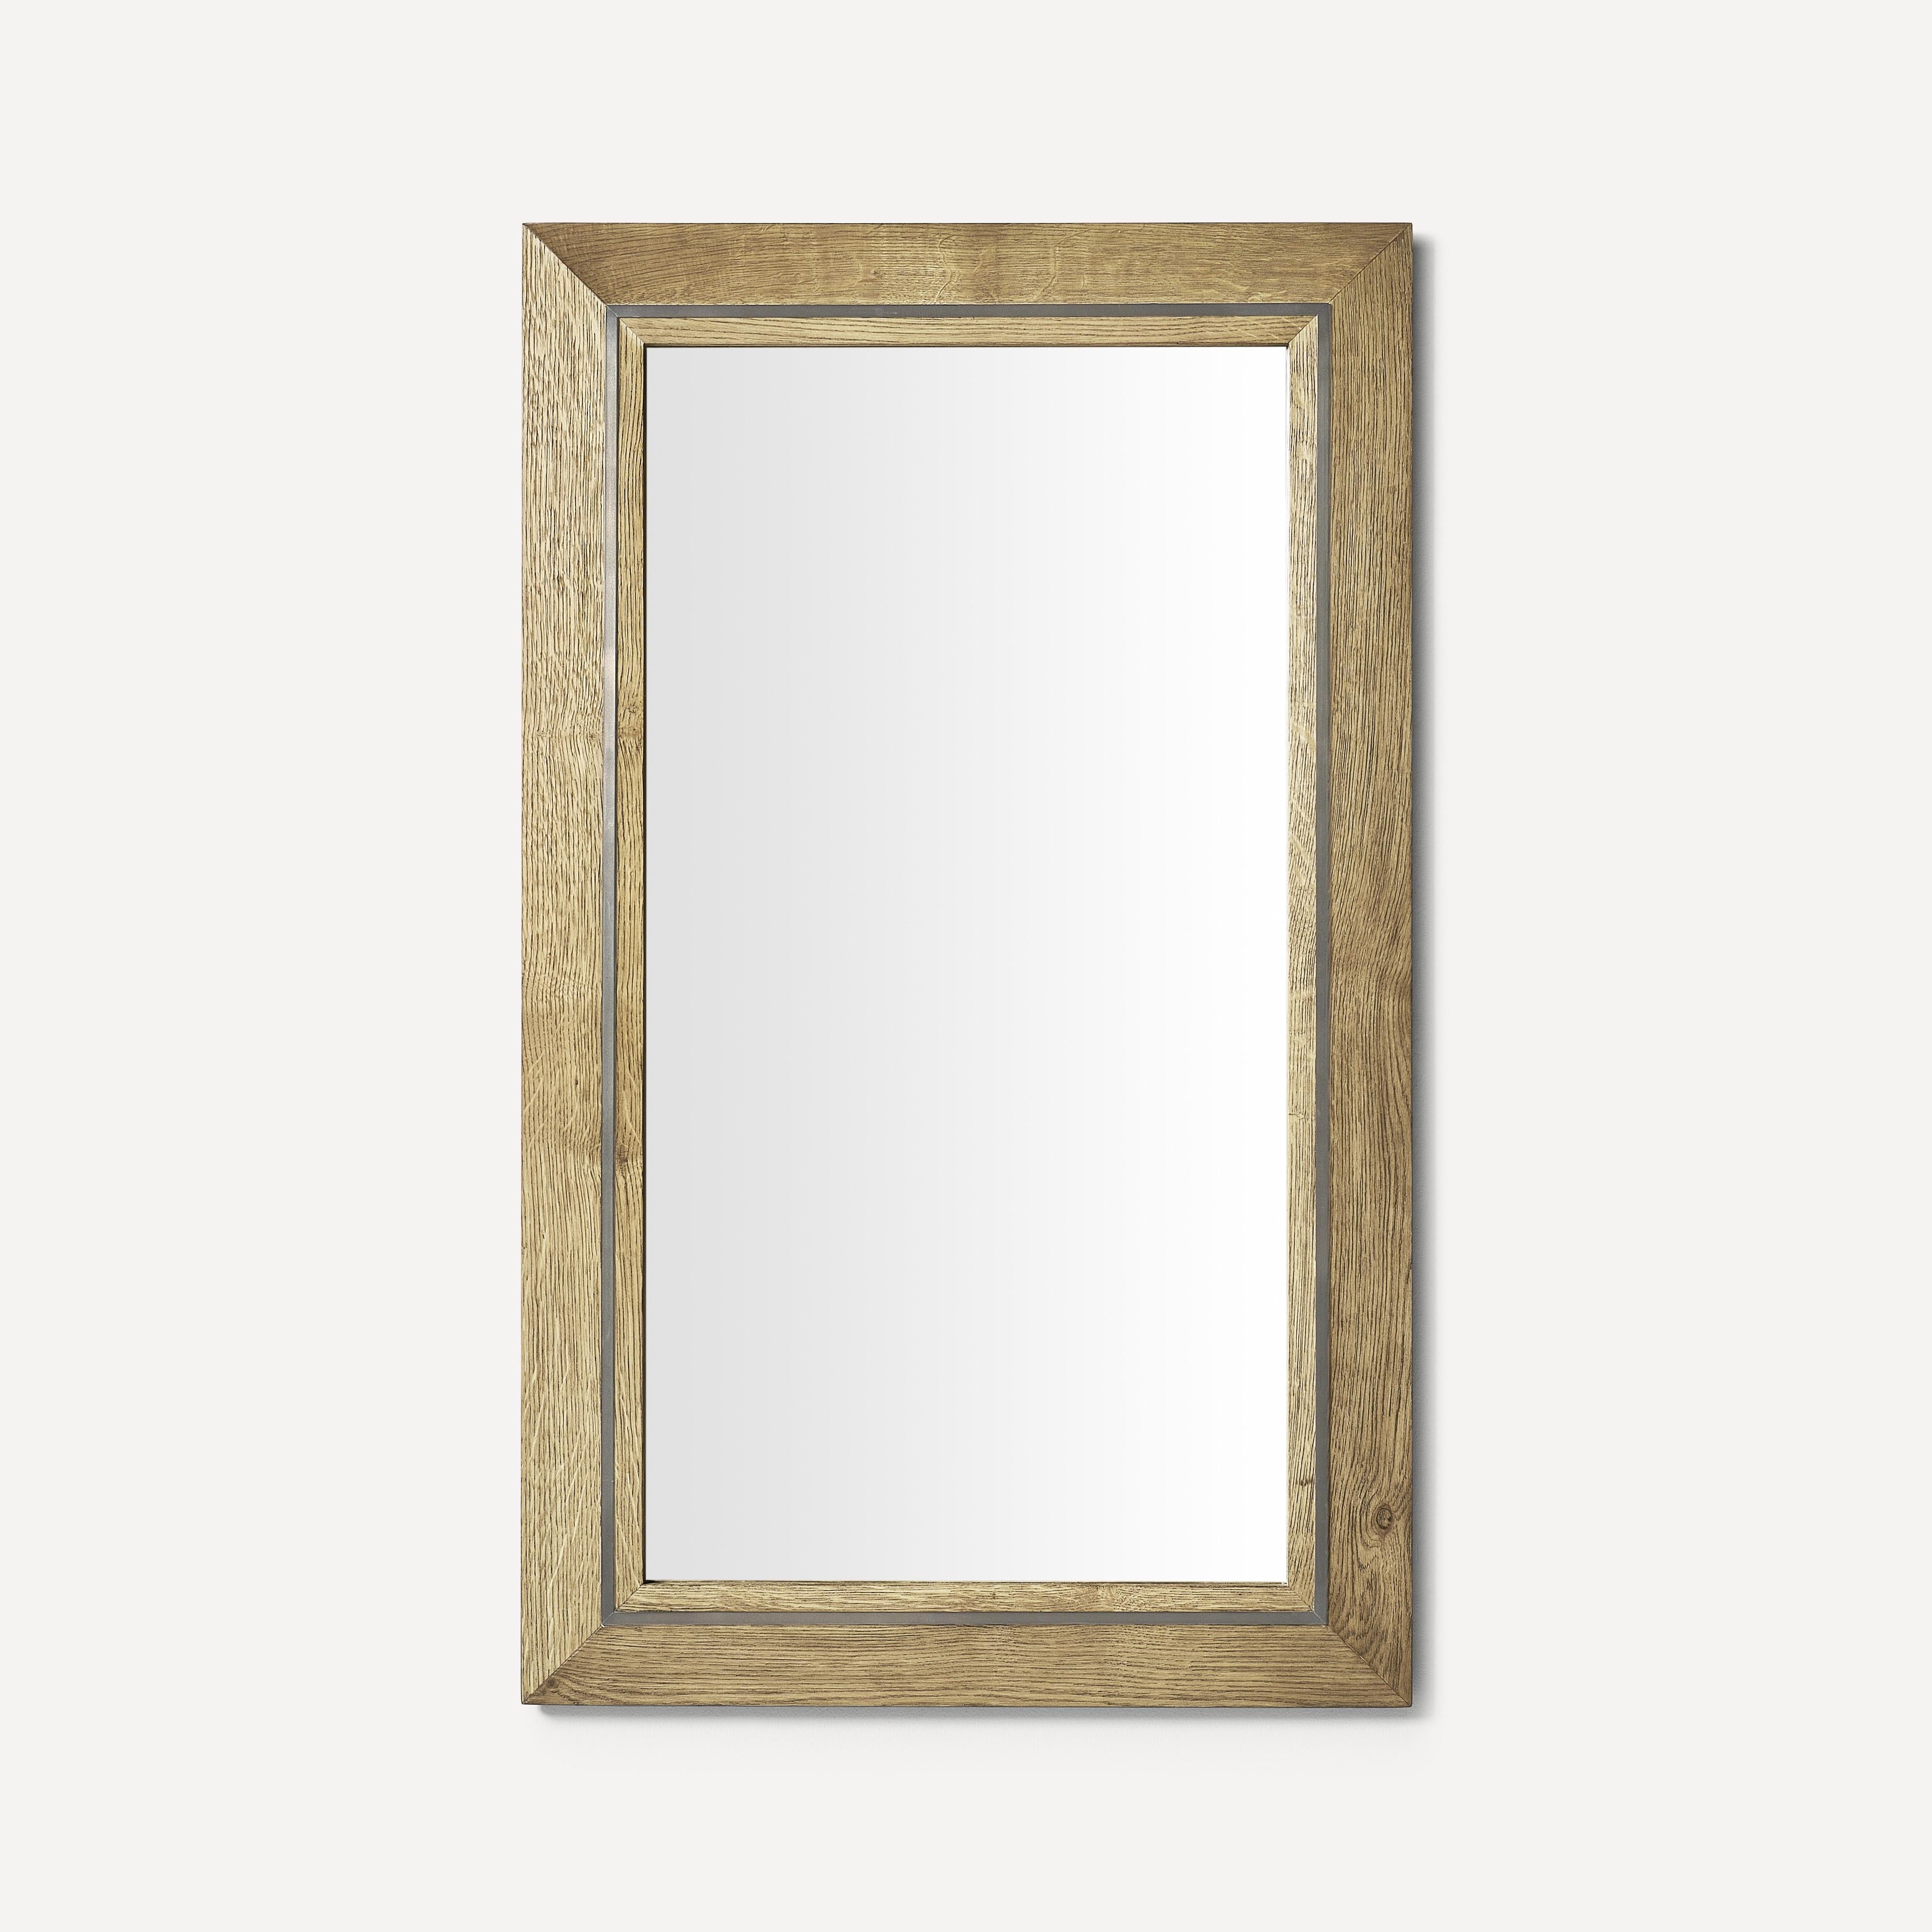 Robern Wood Mirror with Metal Inlay, 24"x 40"x 1-1/2"